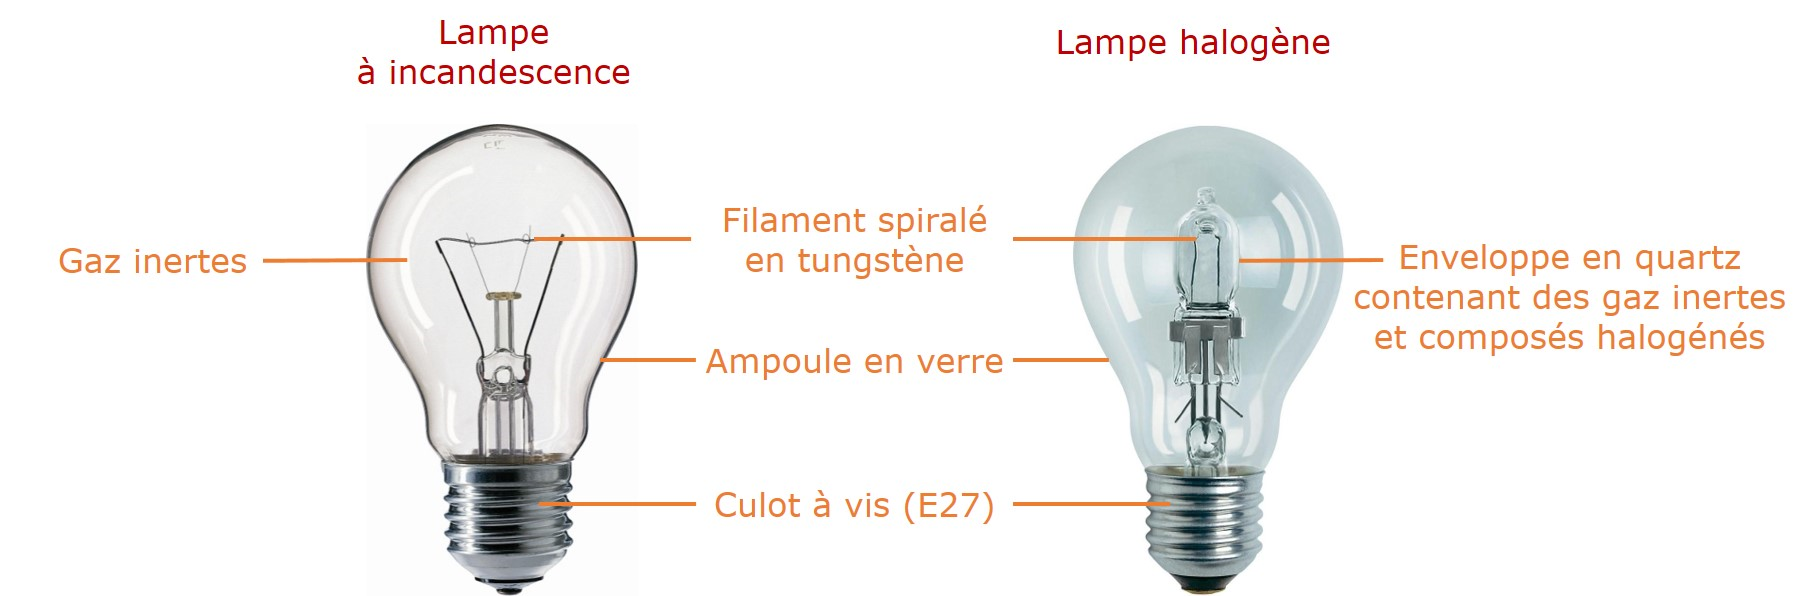 Lampe incandescence et halogène